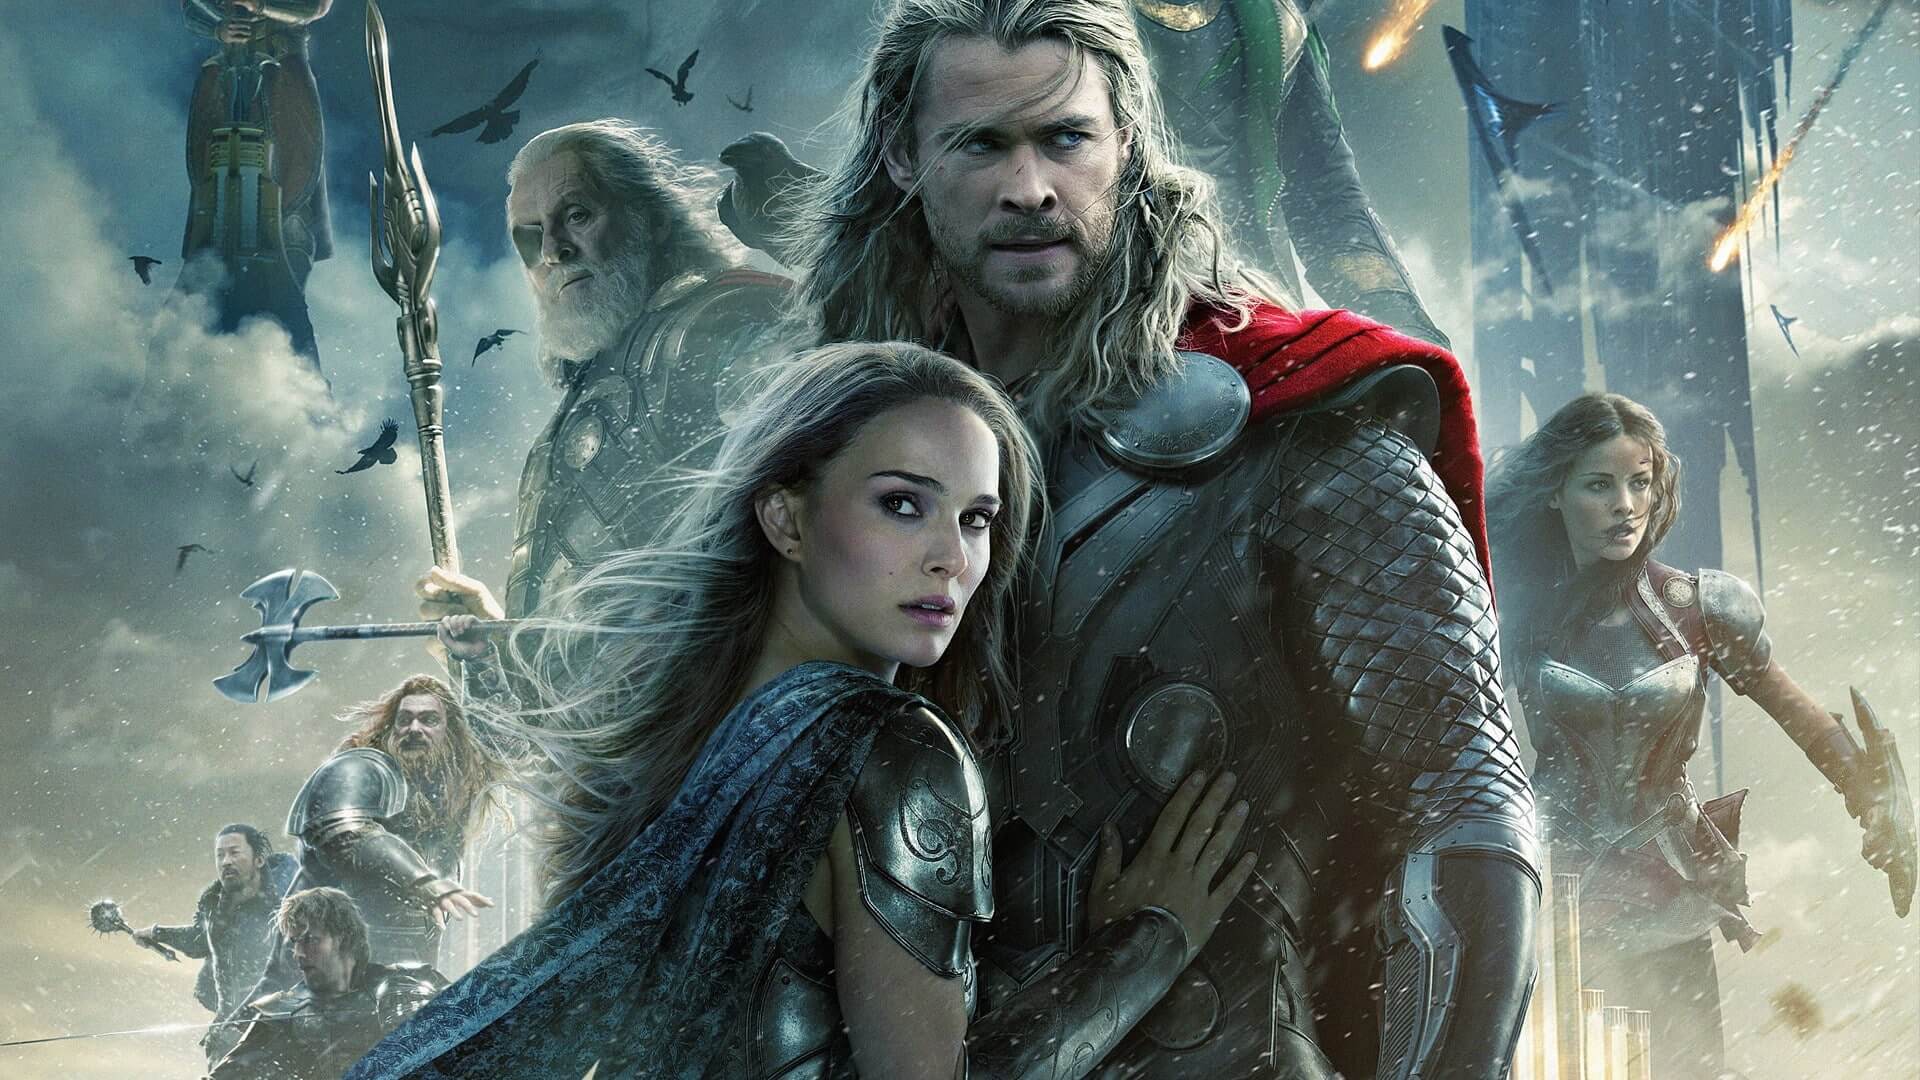 Natalie Portman to Return to MCU as Female Thor. The Nerd Stash